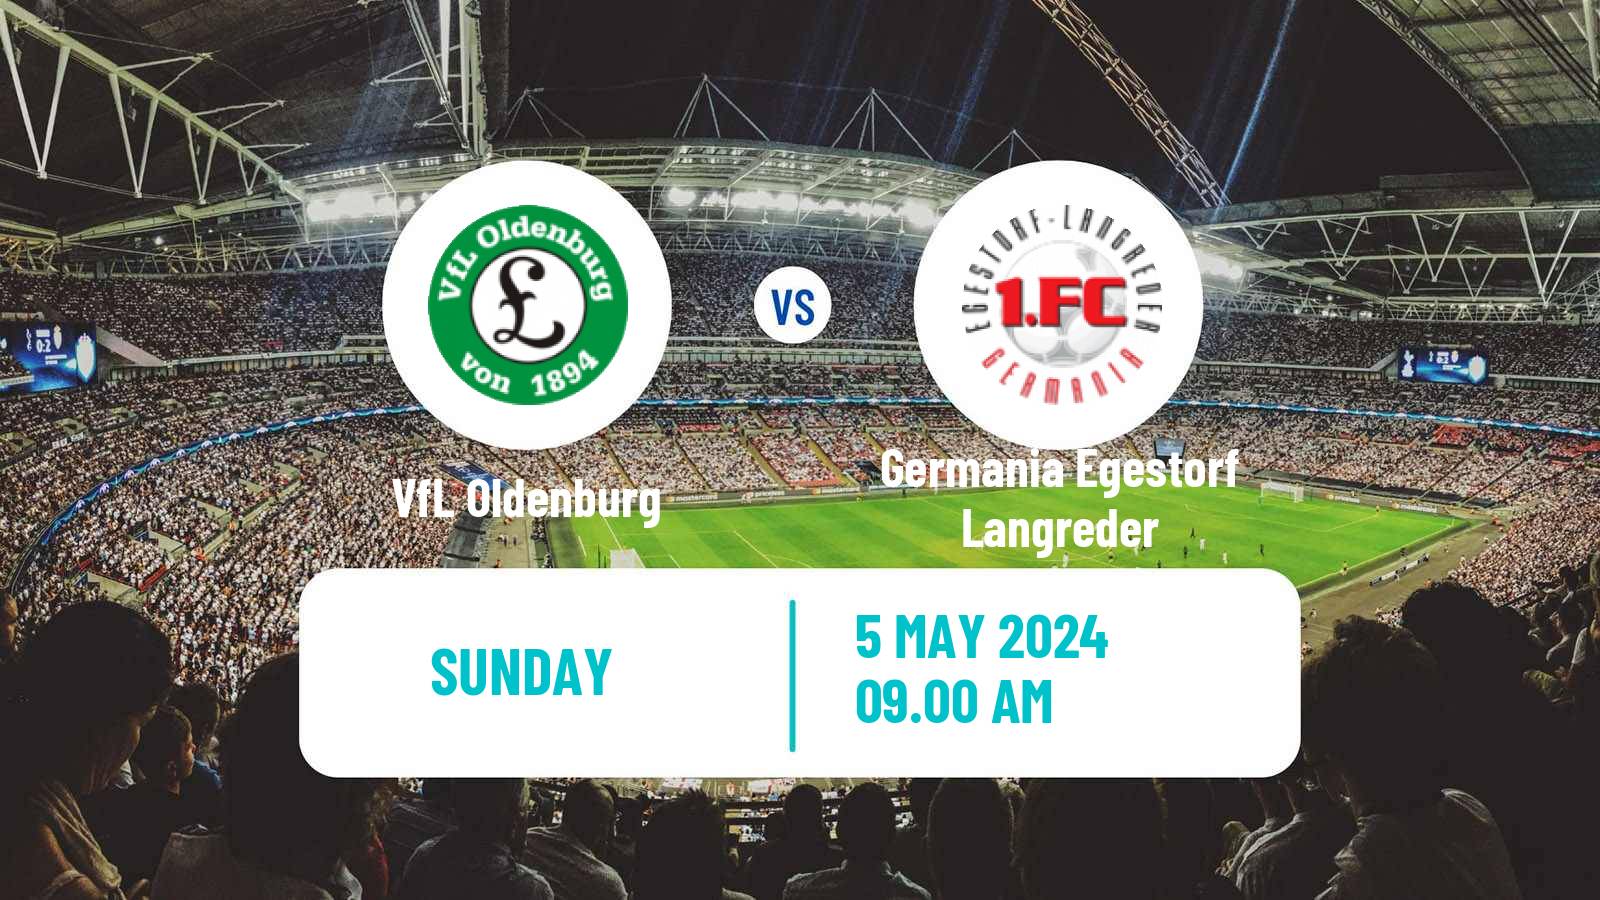 Soccer German Oberliga Niedersachsen VfL Oldenburg - Germania Egestorf Langreder